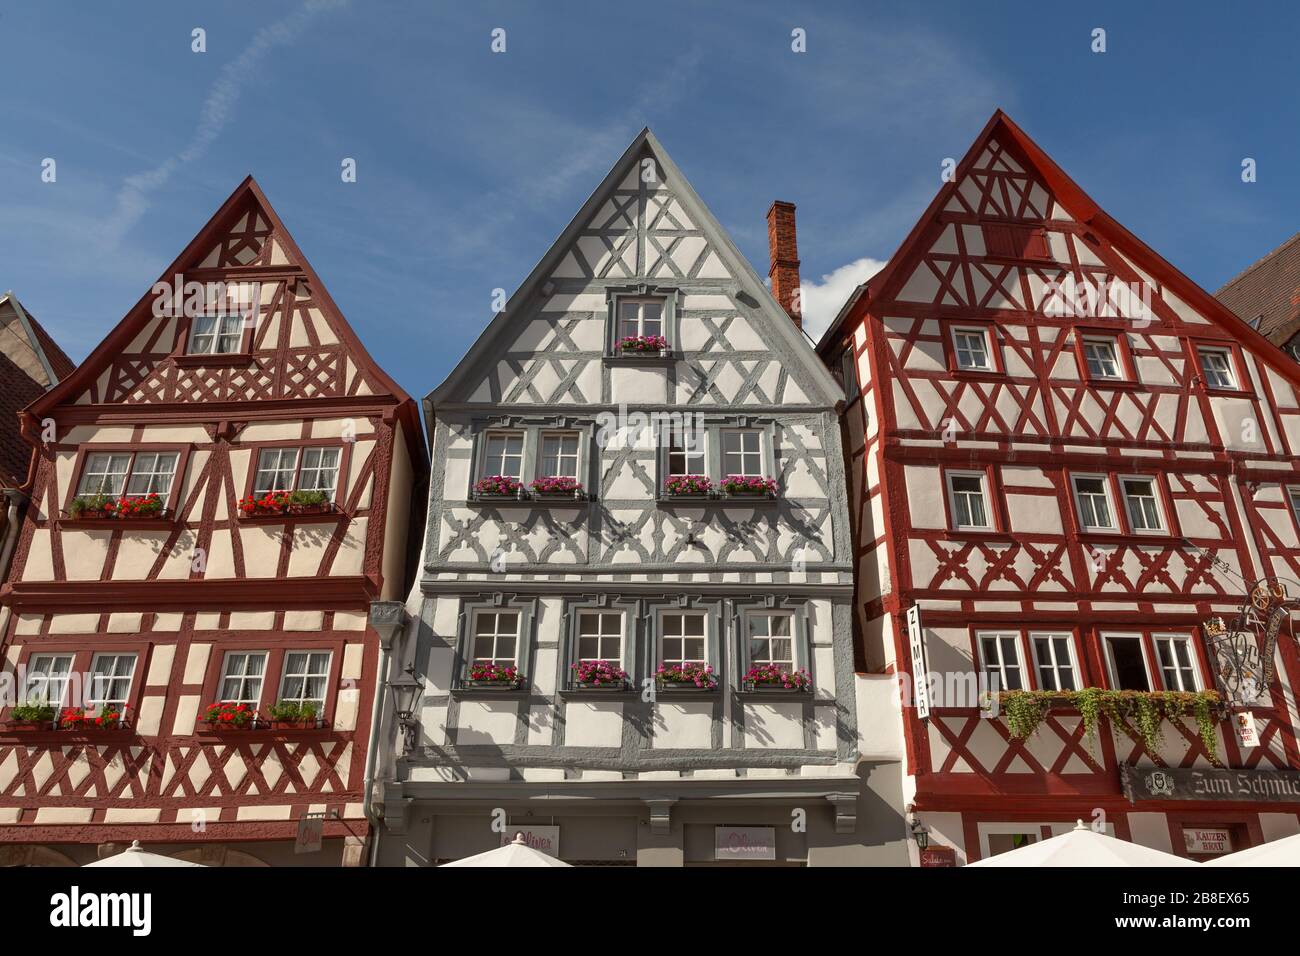 Half timbered houses in Ochsenfurt, Germany Stock Photo